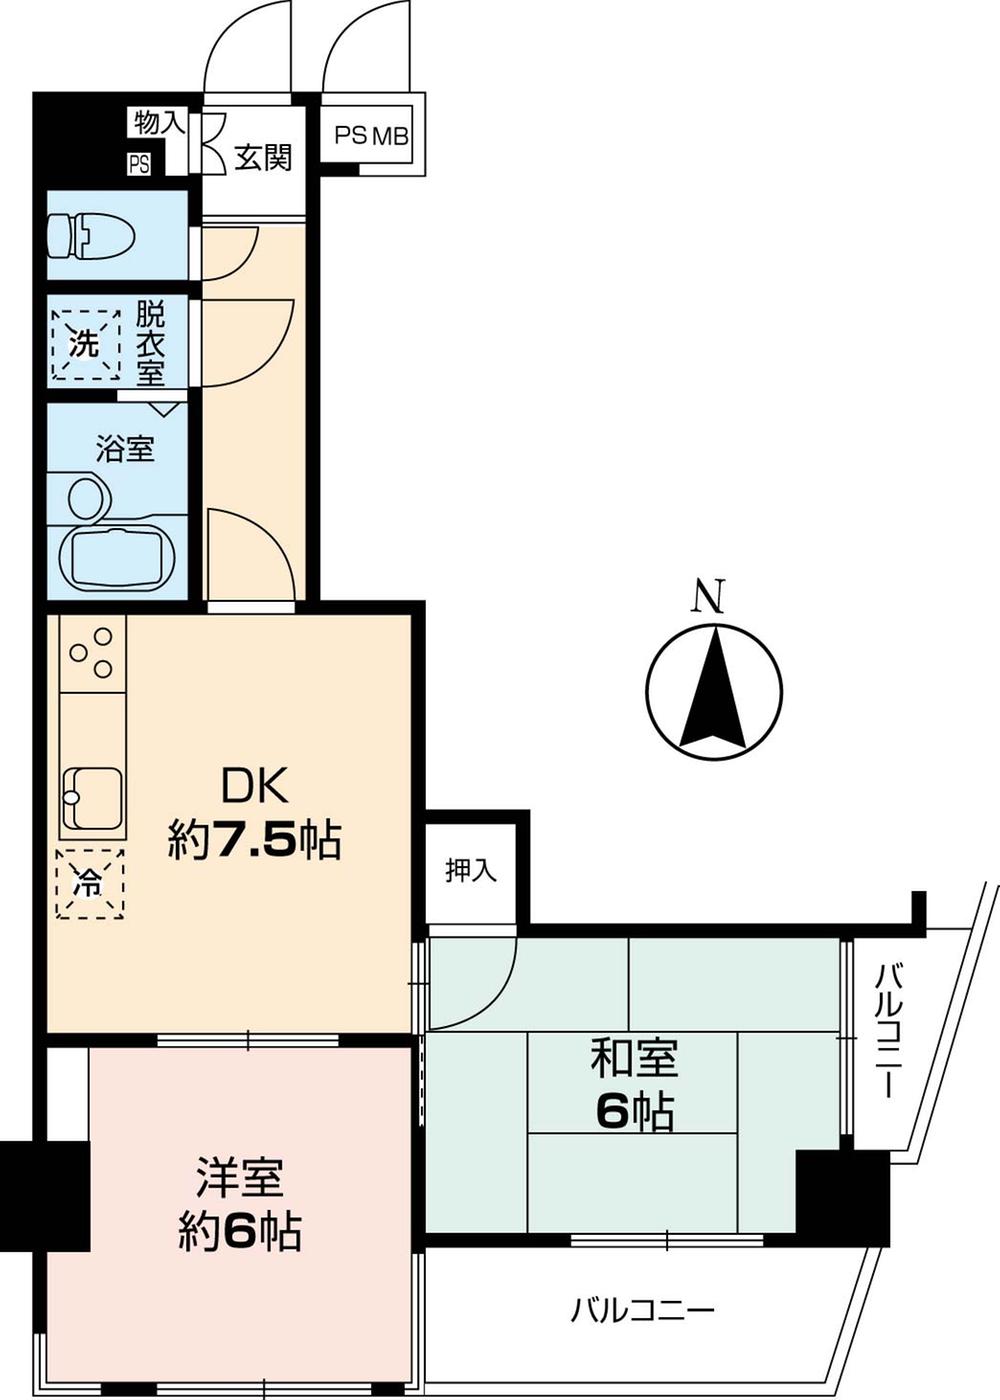 Floor plan. 2DK, Price 10.8 million yen, Occupied area 40.44 sq m , Balcony area 6.5 sq m